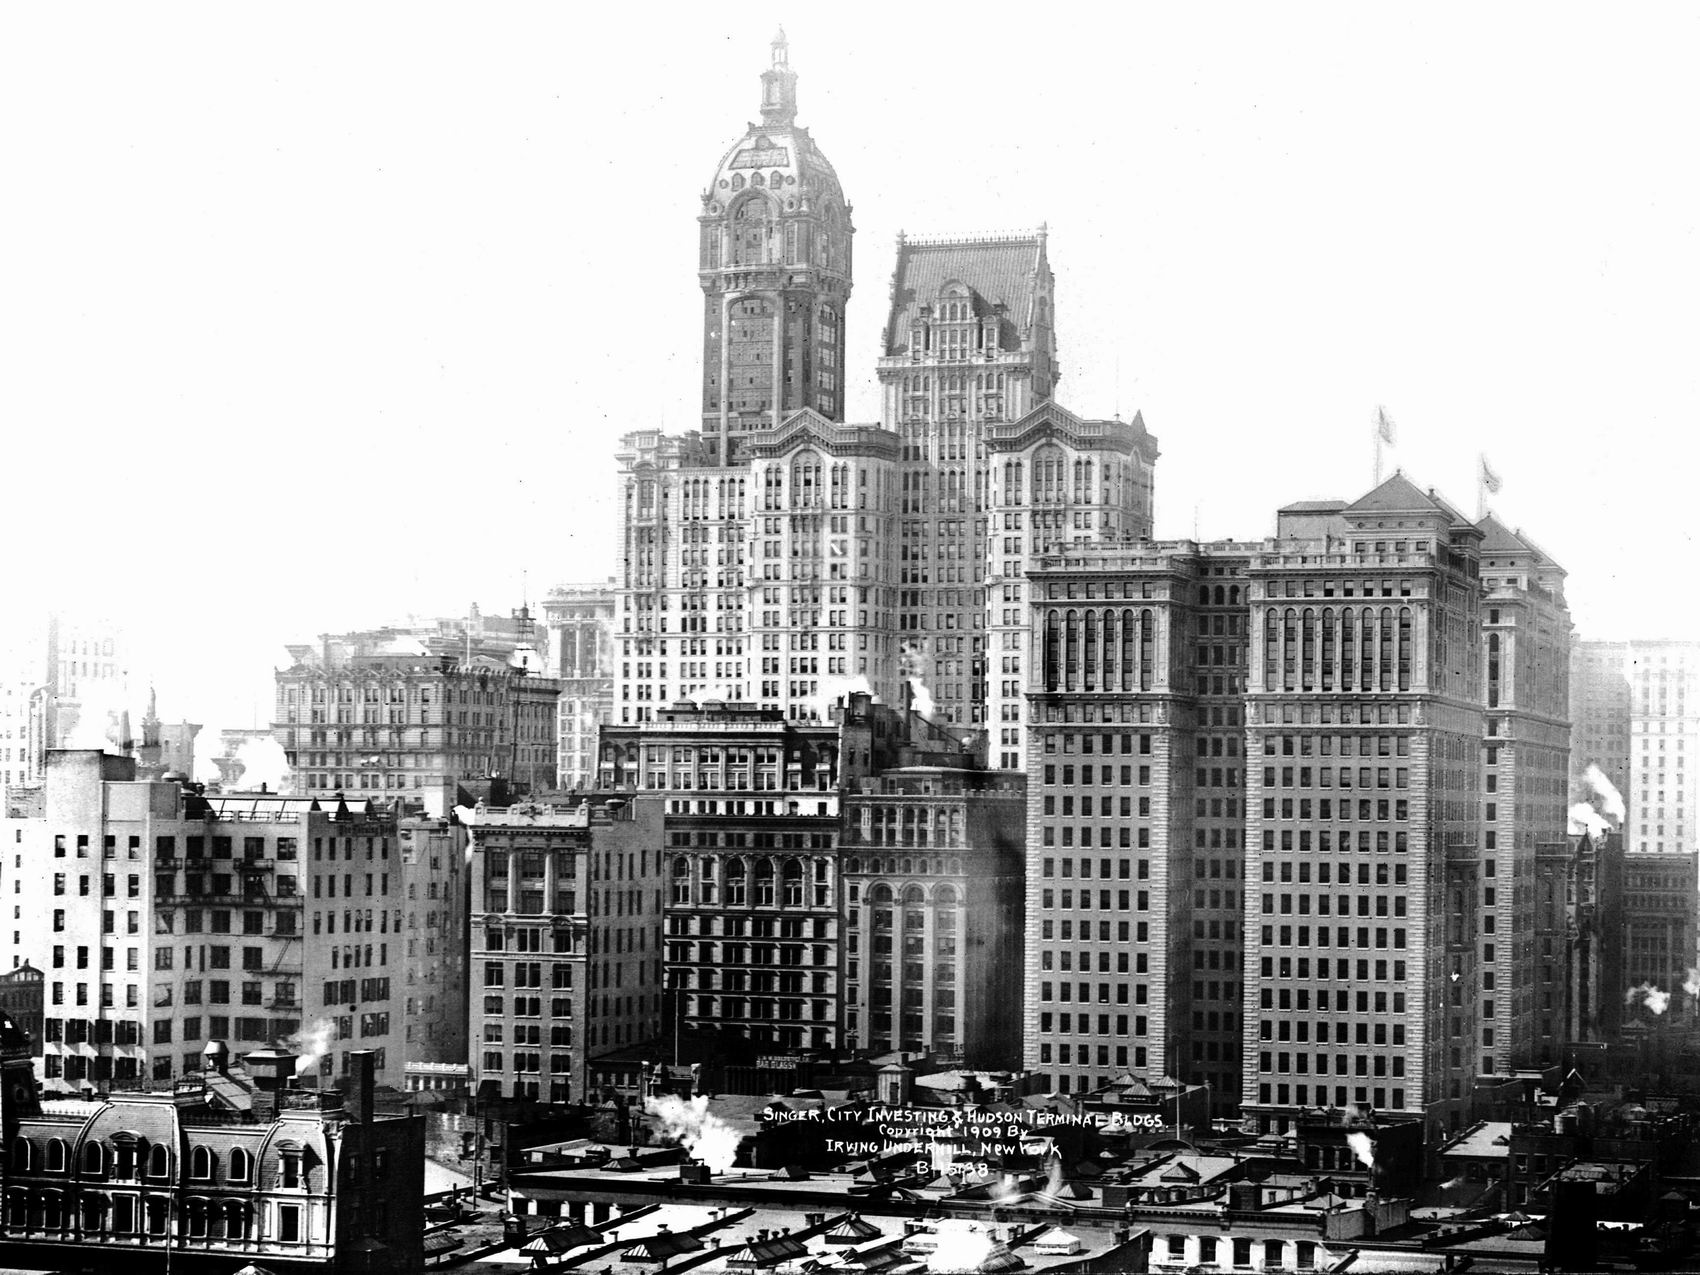 Singer Building, City Investing и Hudson Terminal - фото 1909 года.jpg